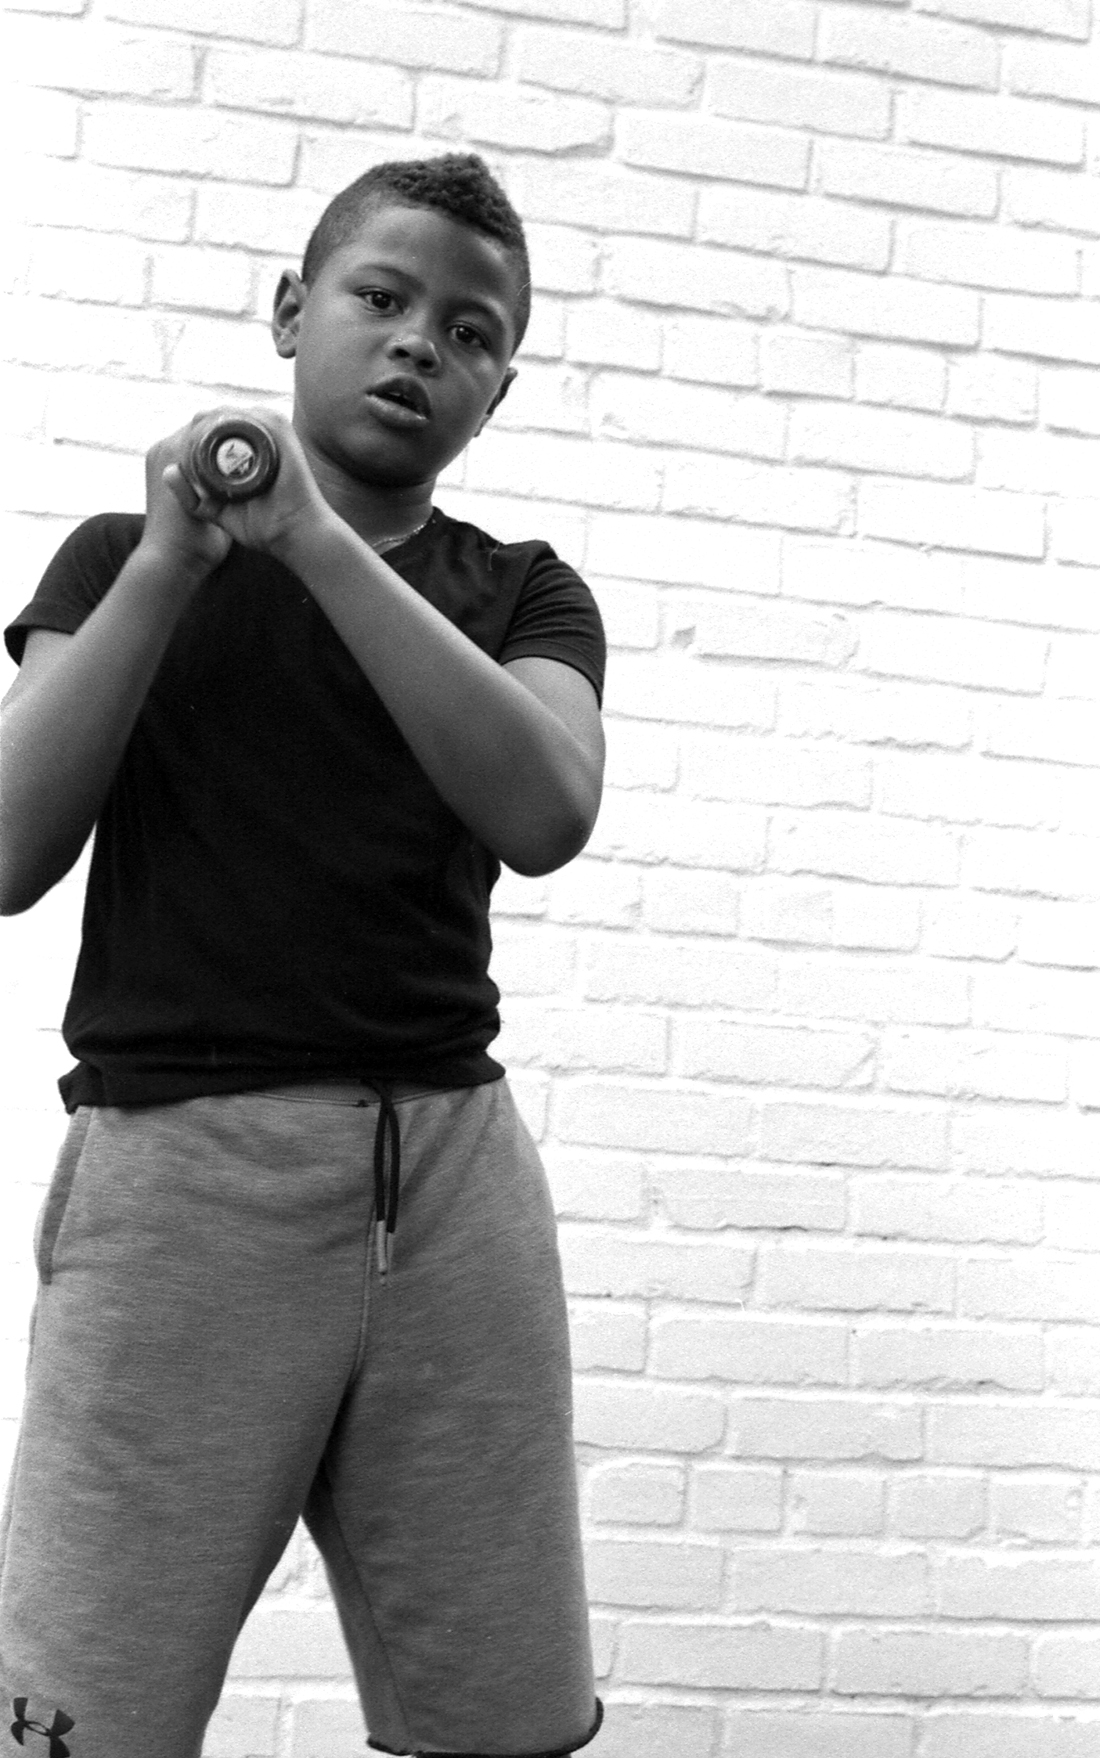 Young Boy with a black t-shirt swinging a baseball bat